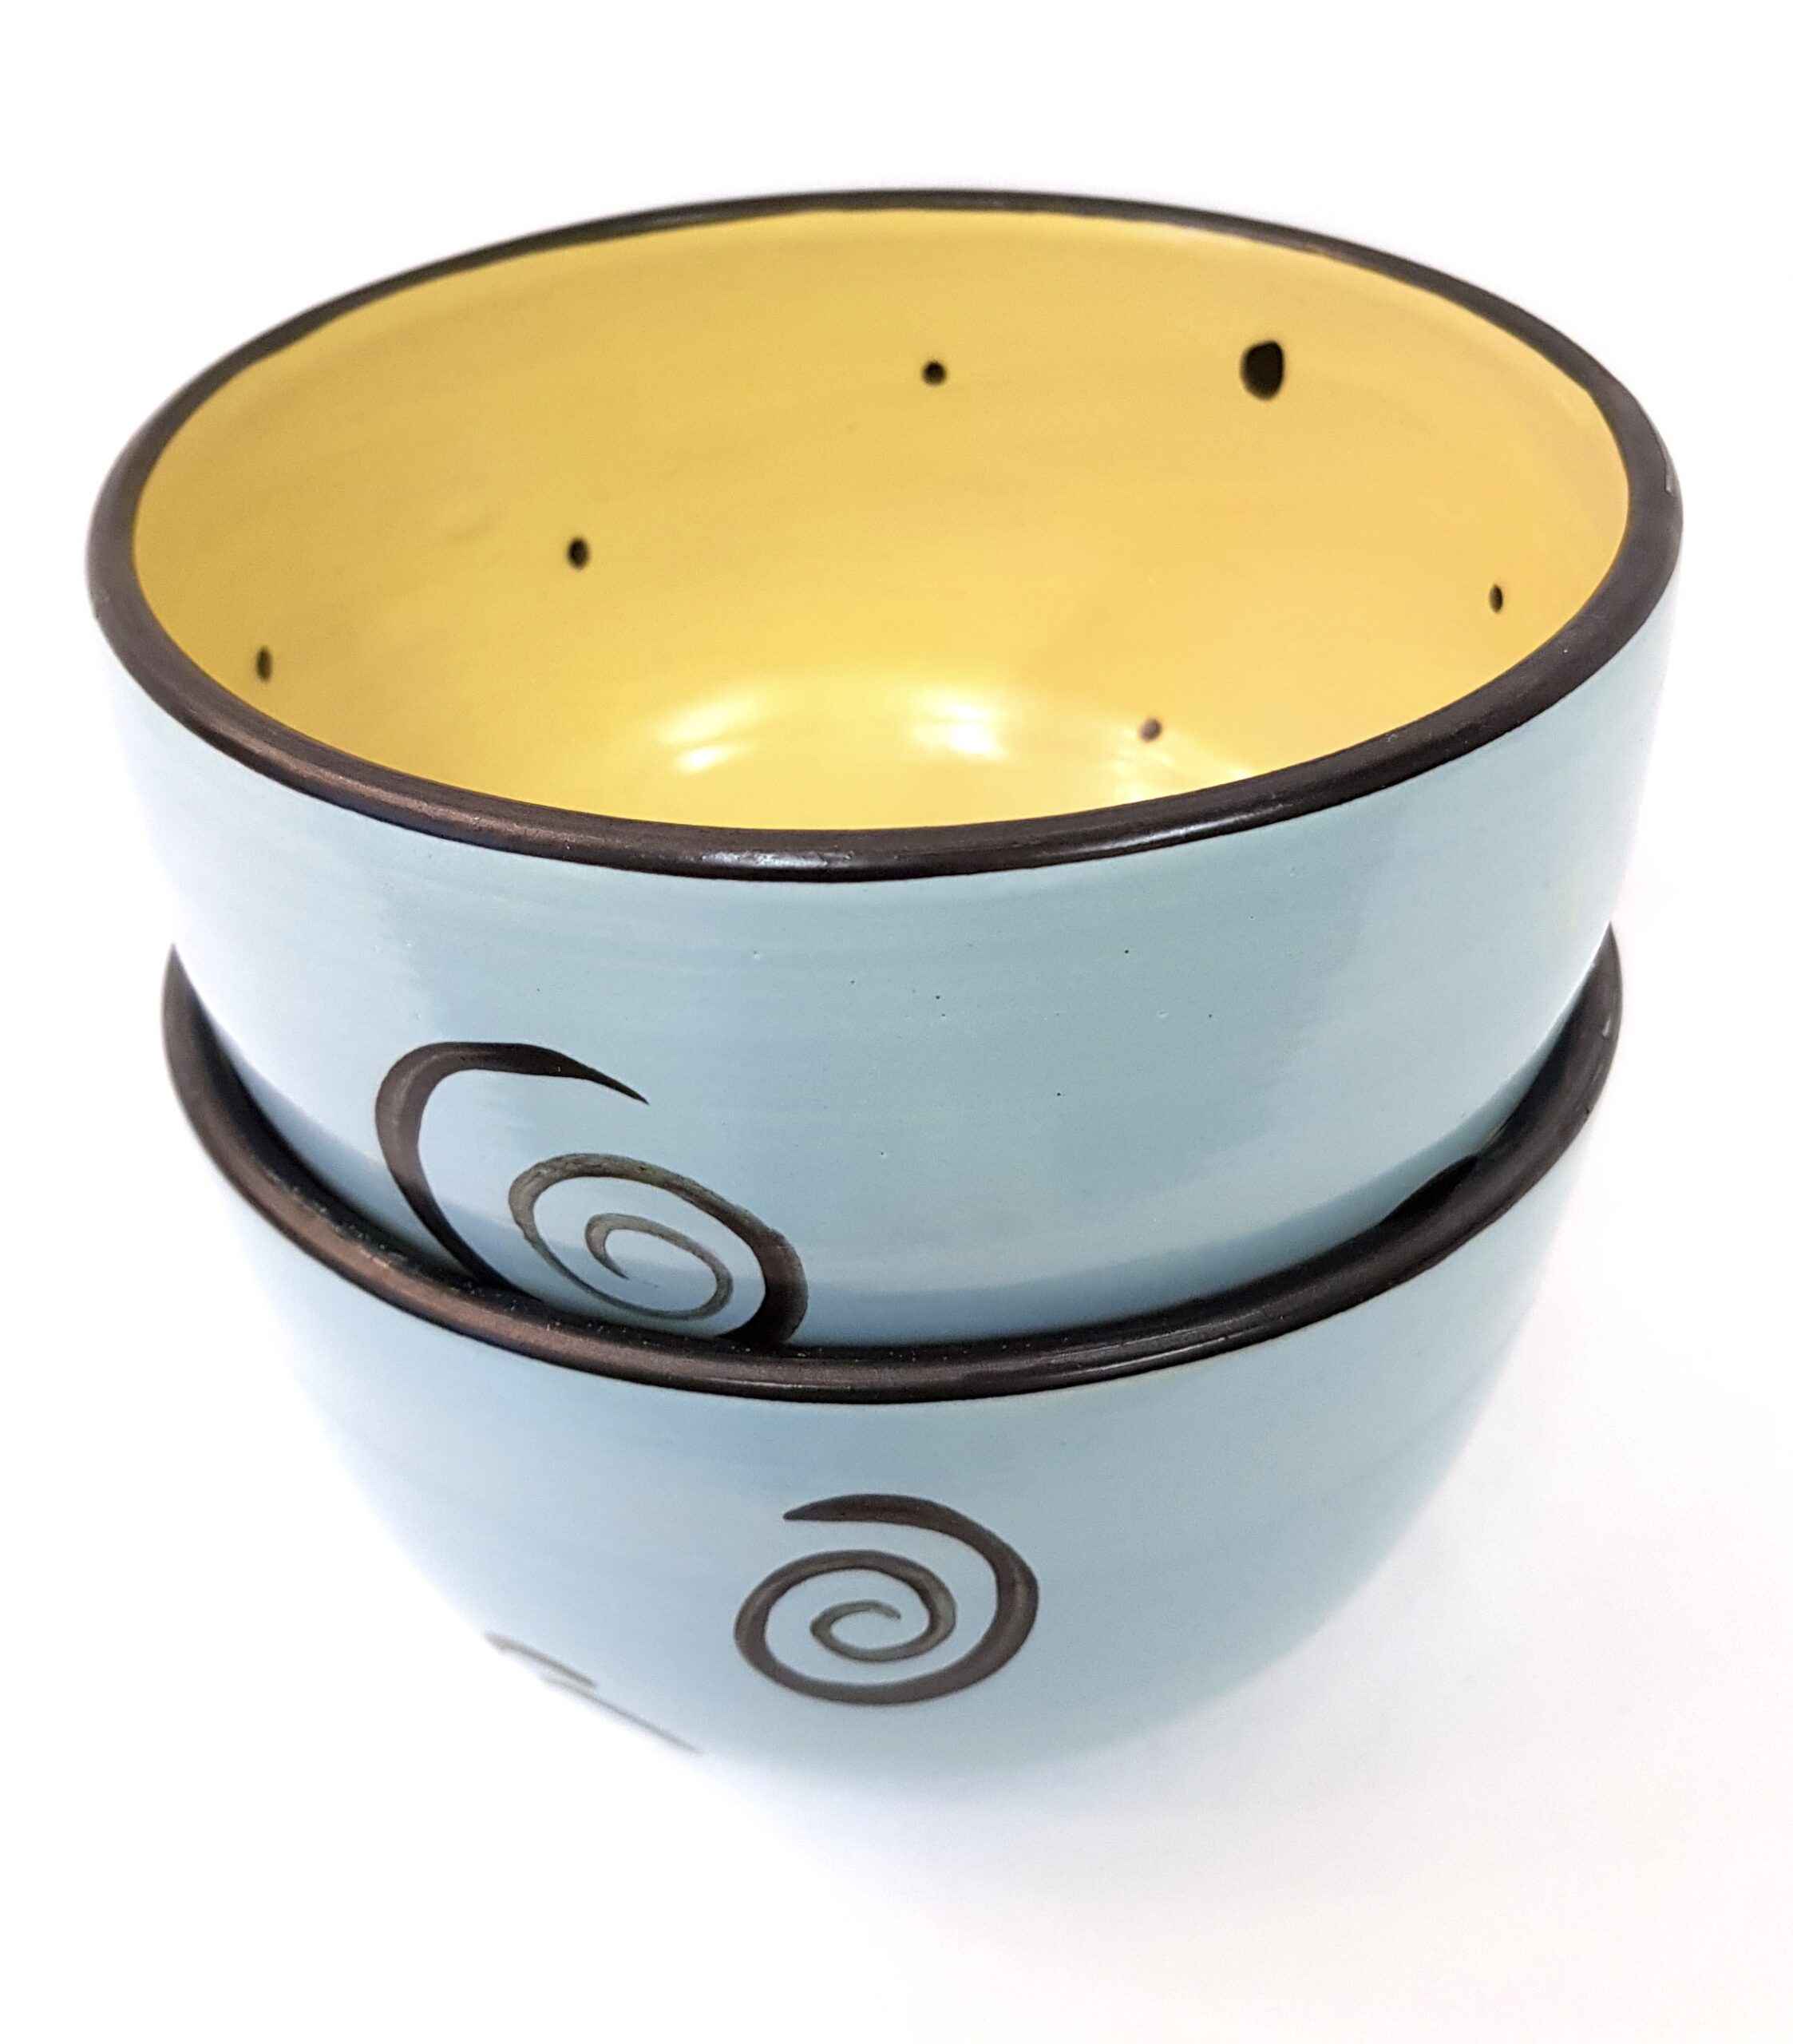 Keramik-Bowl, Unikat, Töpferei la ceramica Basel, Shop, Keramik, Teamevents